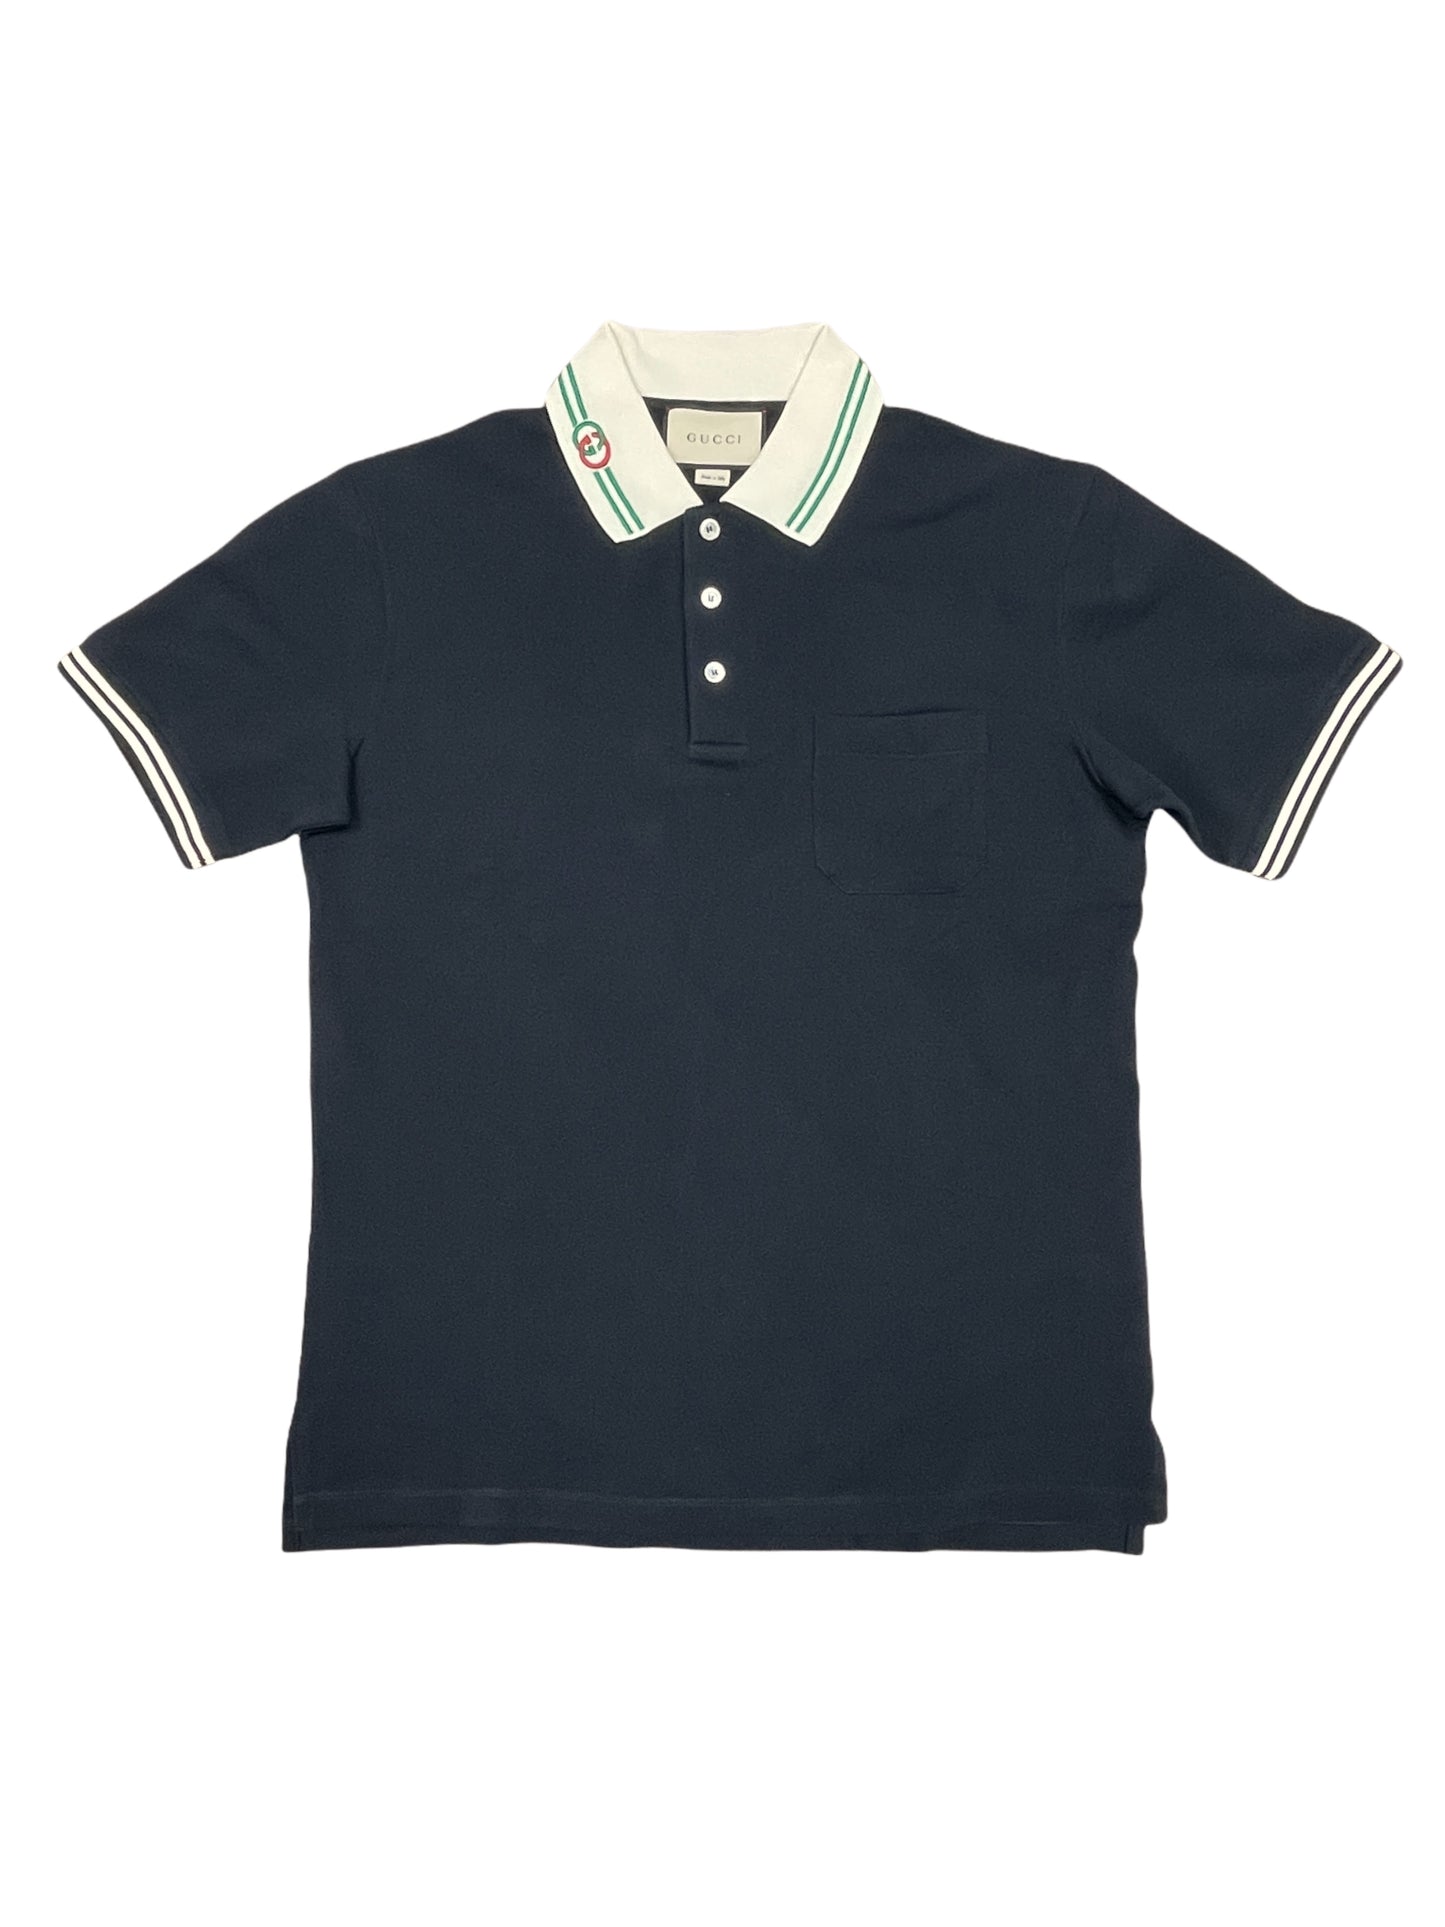 GUCCI Black & Cream Short Sleeve Polo Shirt - Large